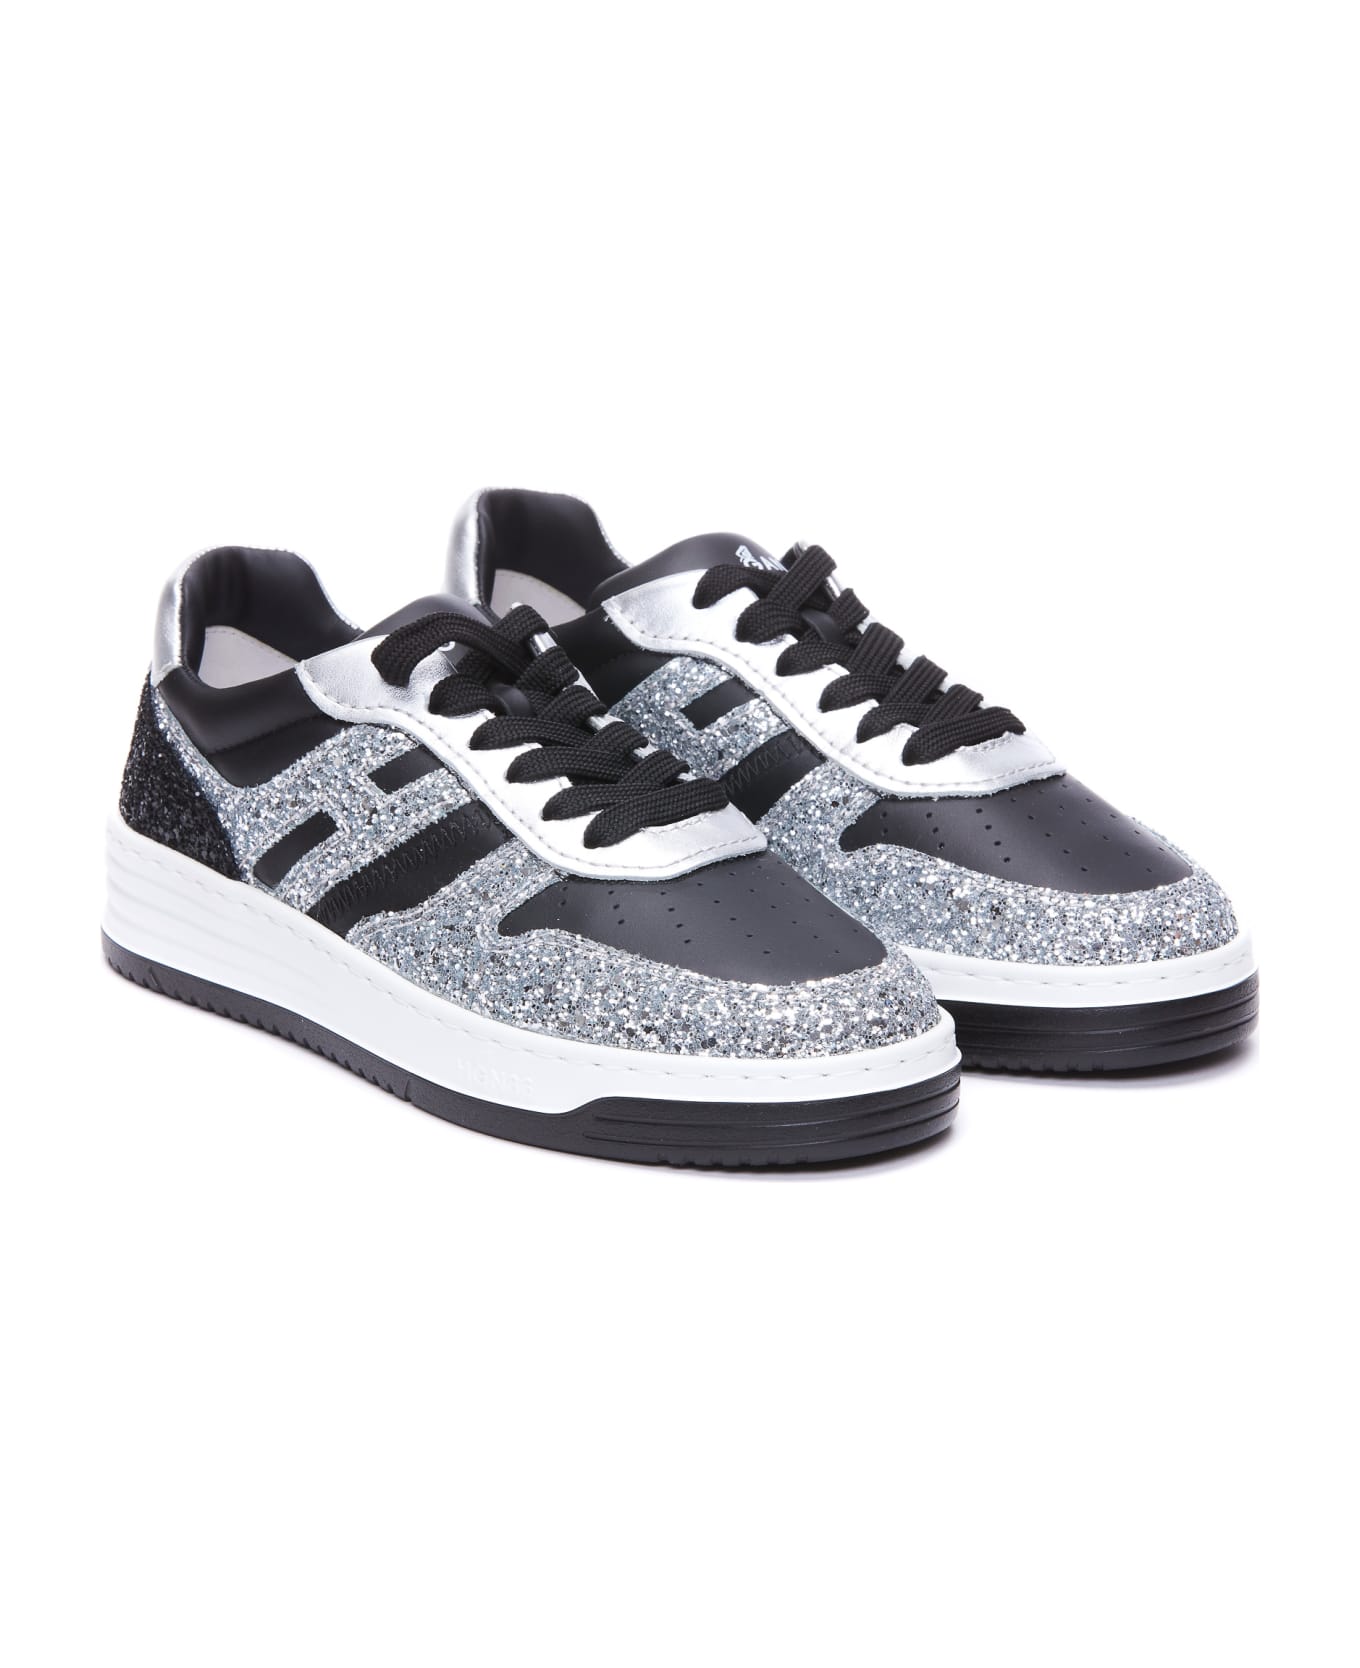 Hogan H630 Sneakers - Black silver